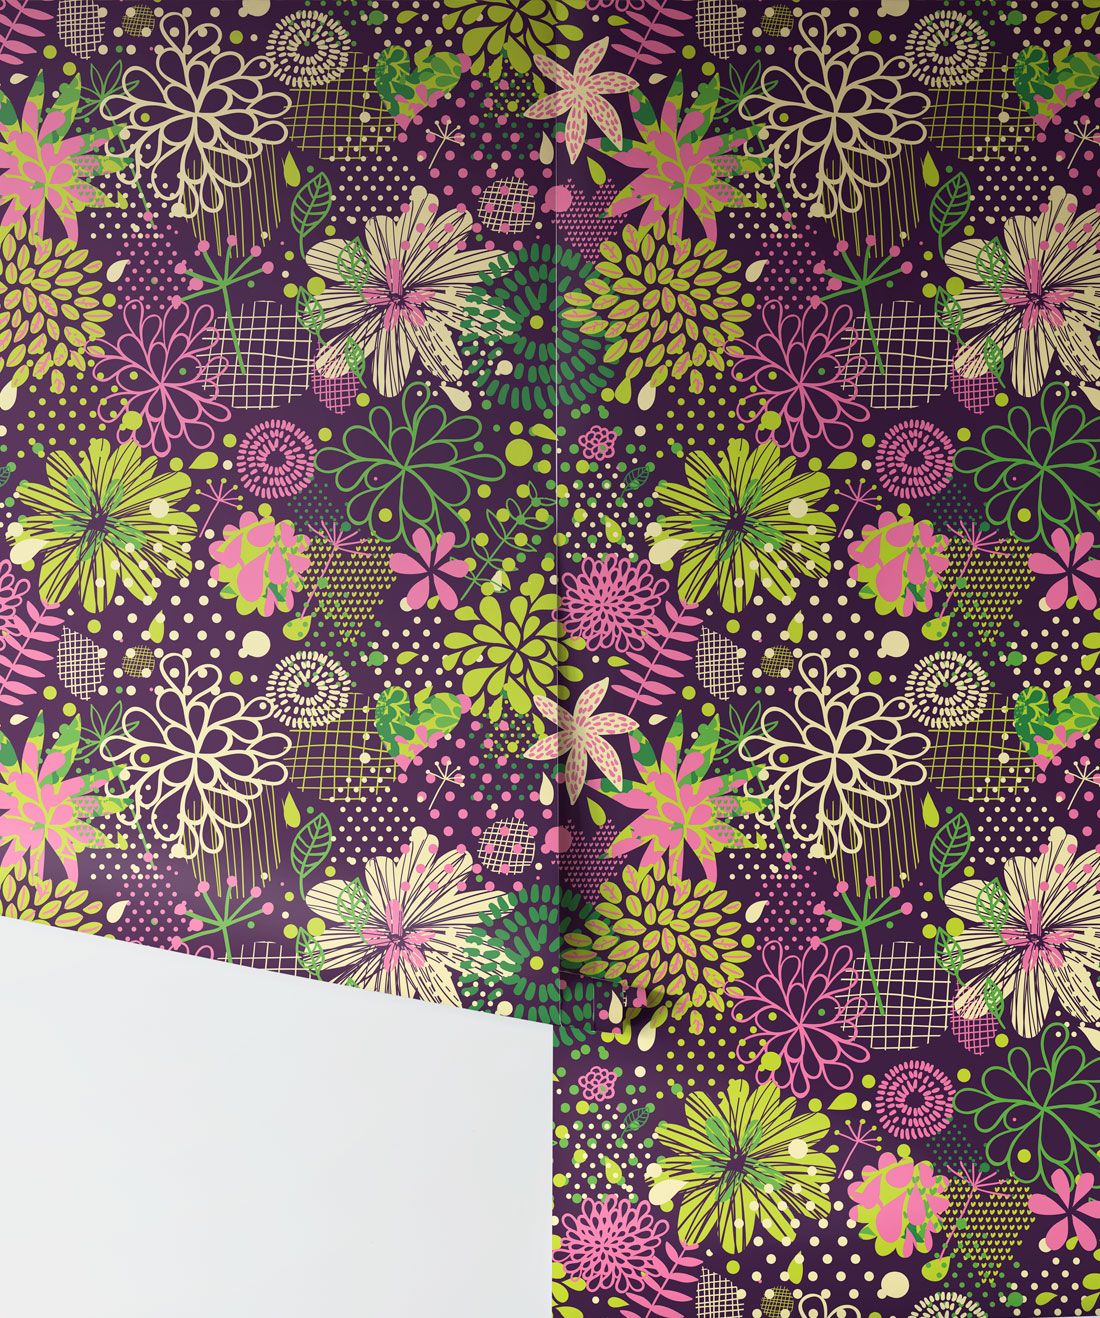 3D Colourful Floral Wall Mural Wallpaper WJ 5155 | Jessartdecoration